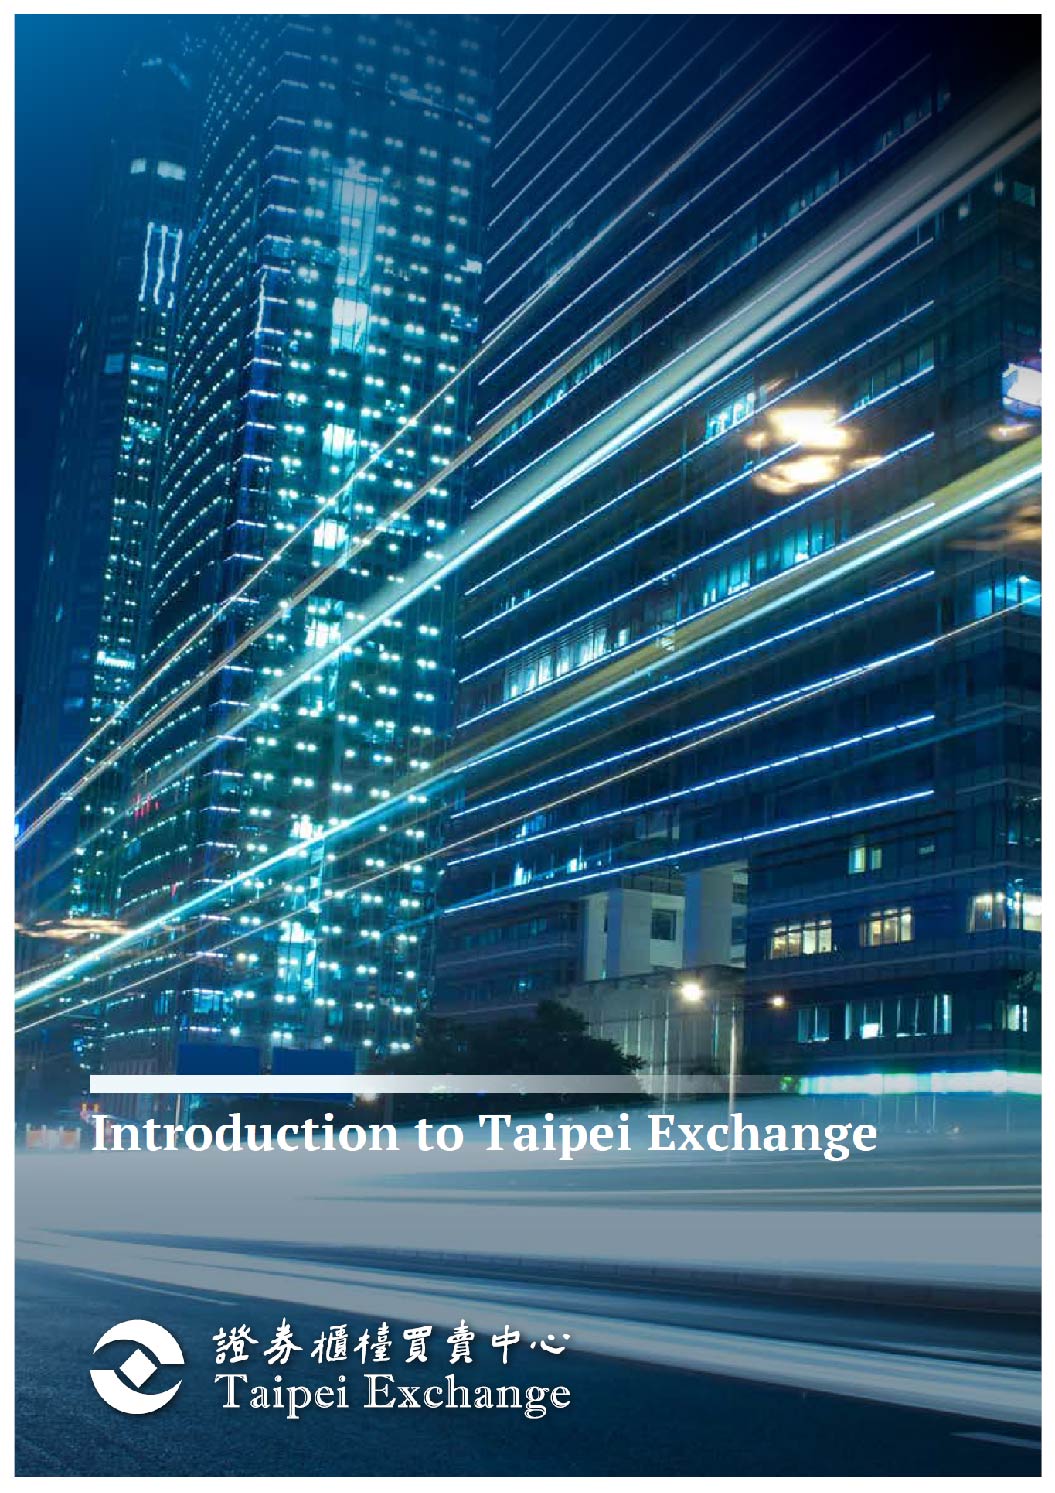 Introduction to Taipei Exchange